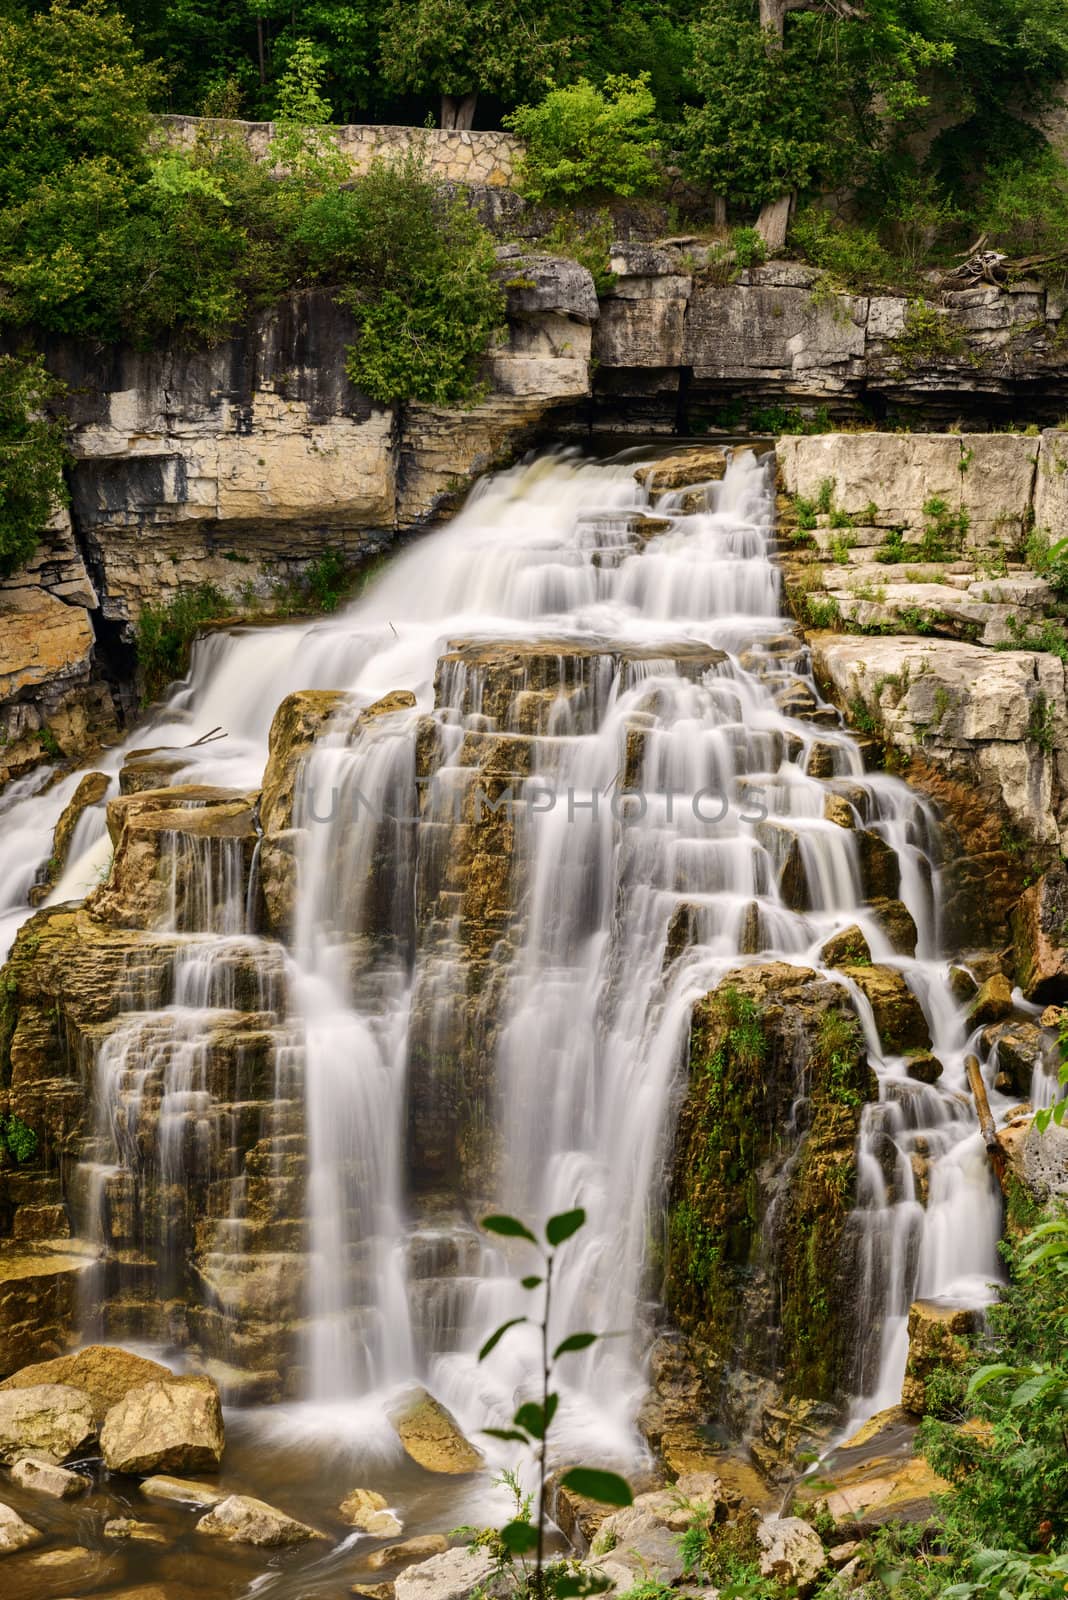 Inglis Falls in Owen Sound, Ontario, Canada by Marcus